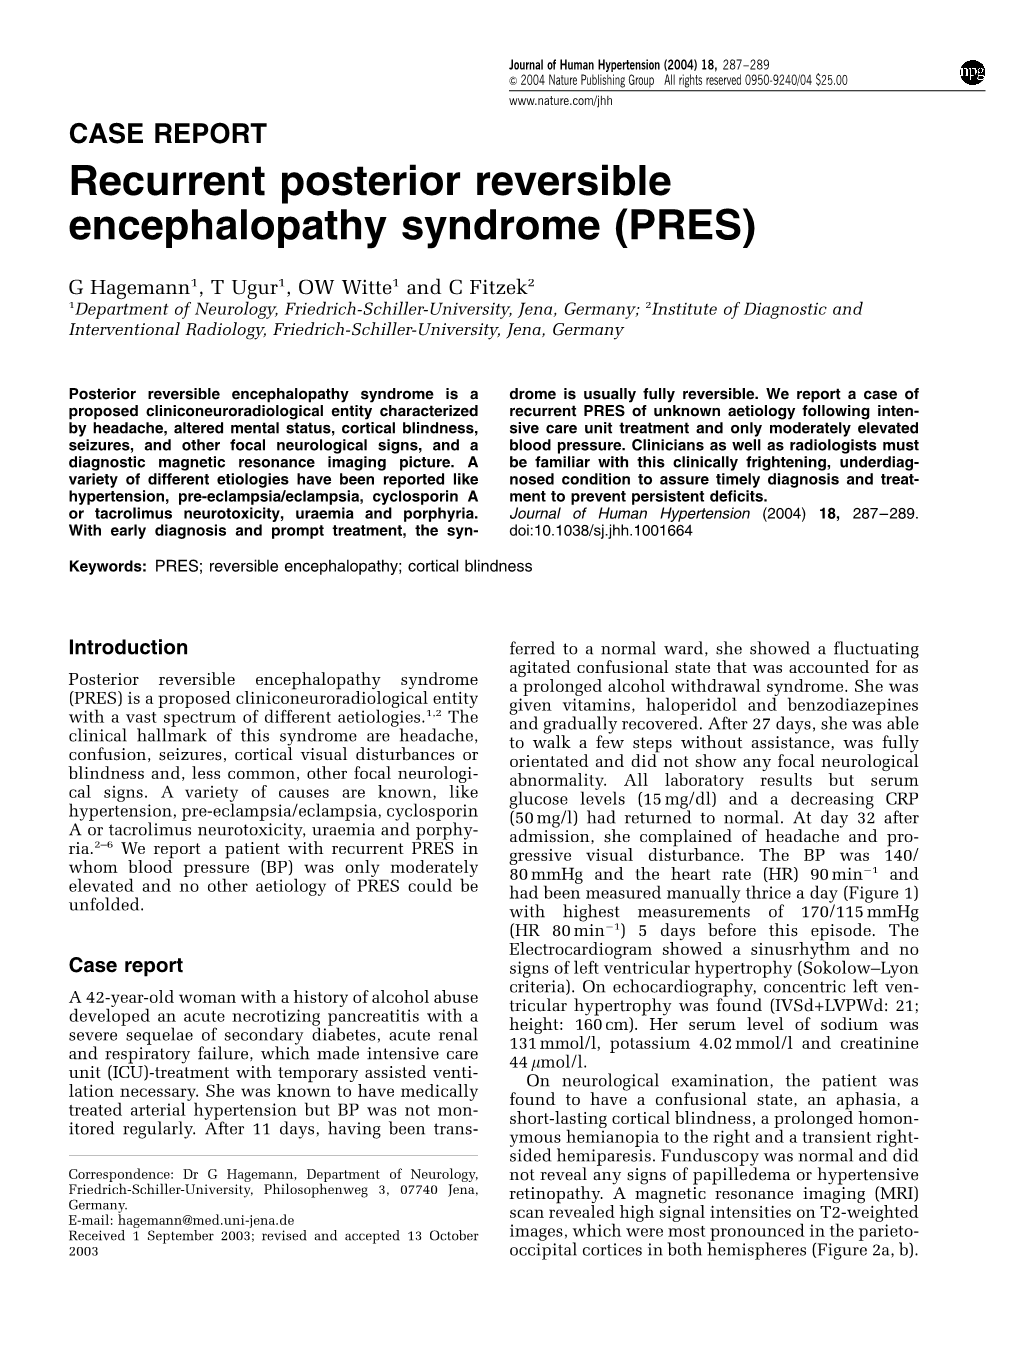 Recurrent Posterior Reversible Encephalopathy Syndrome (PRES)